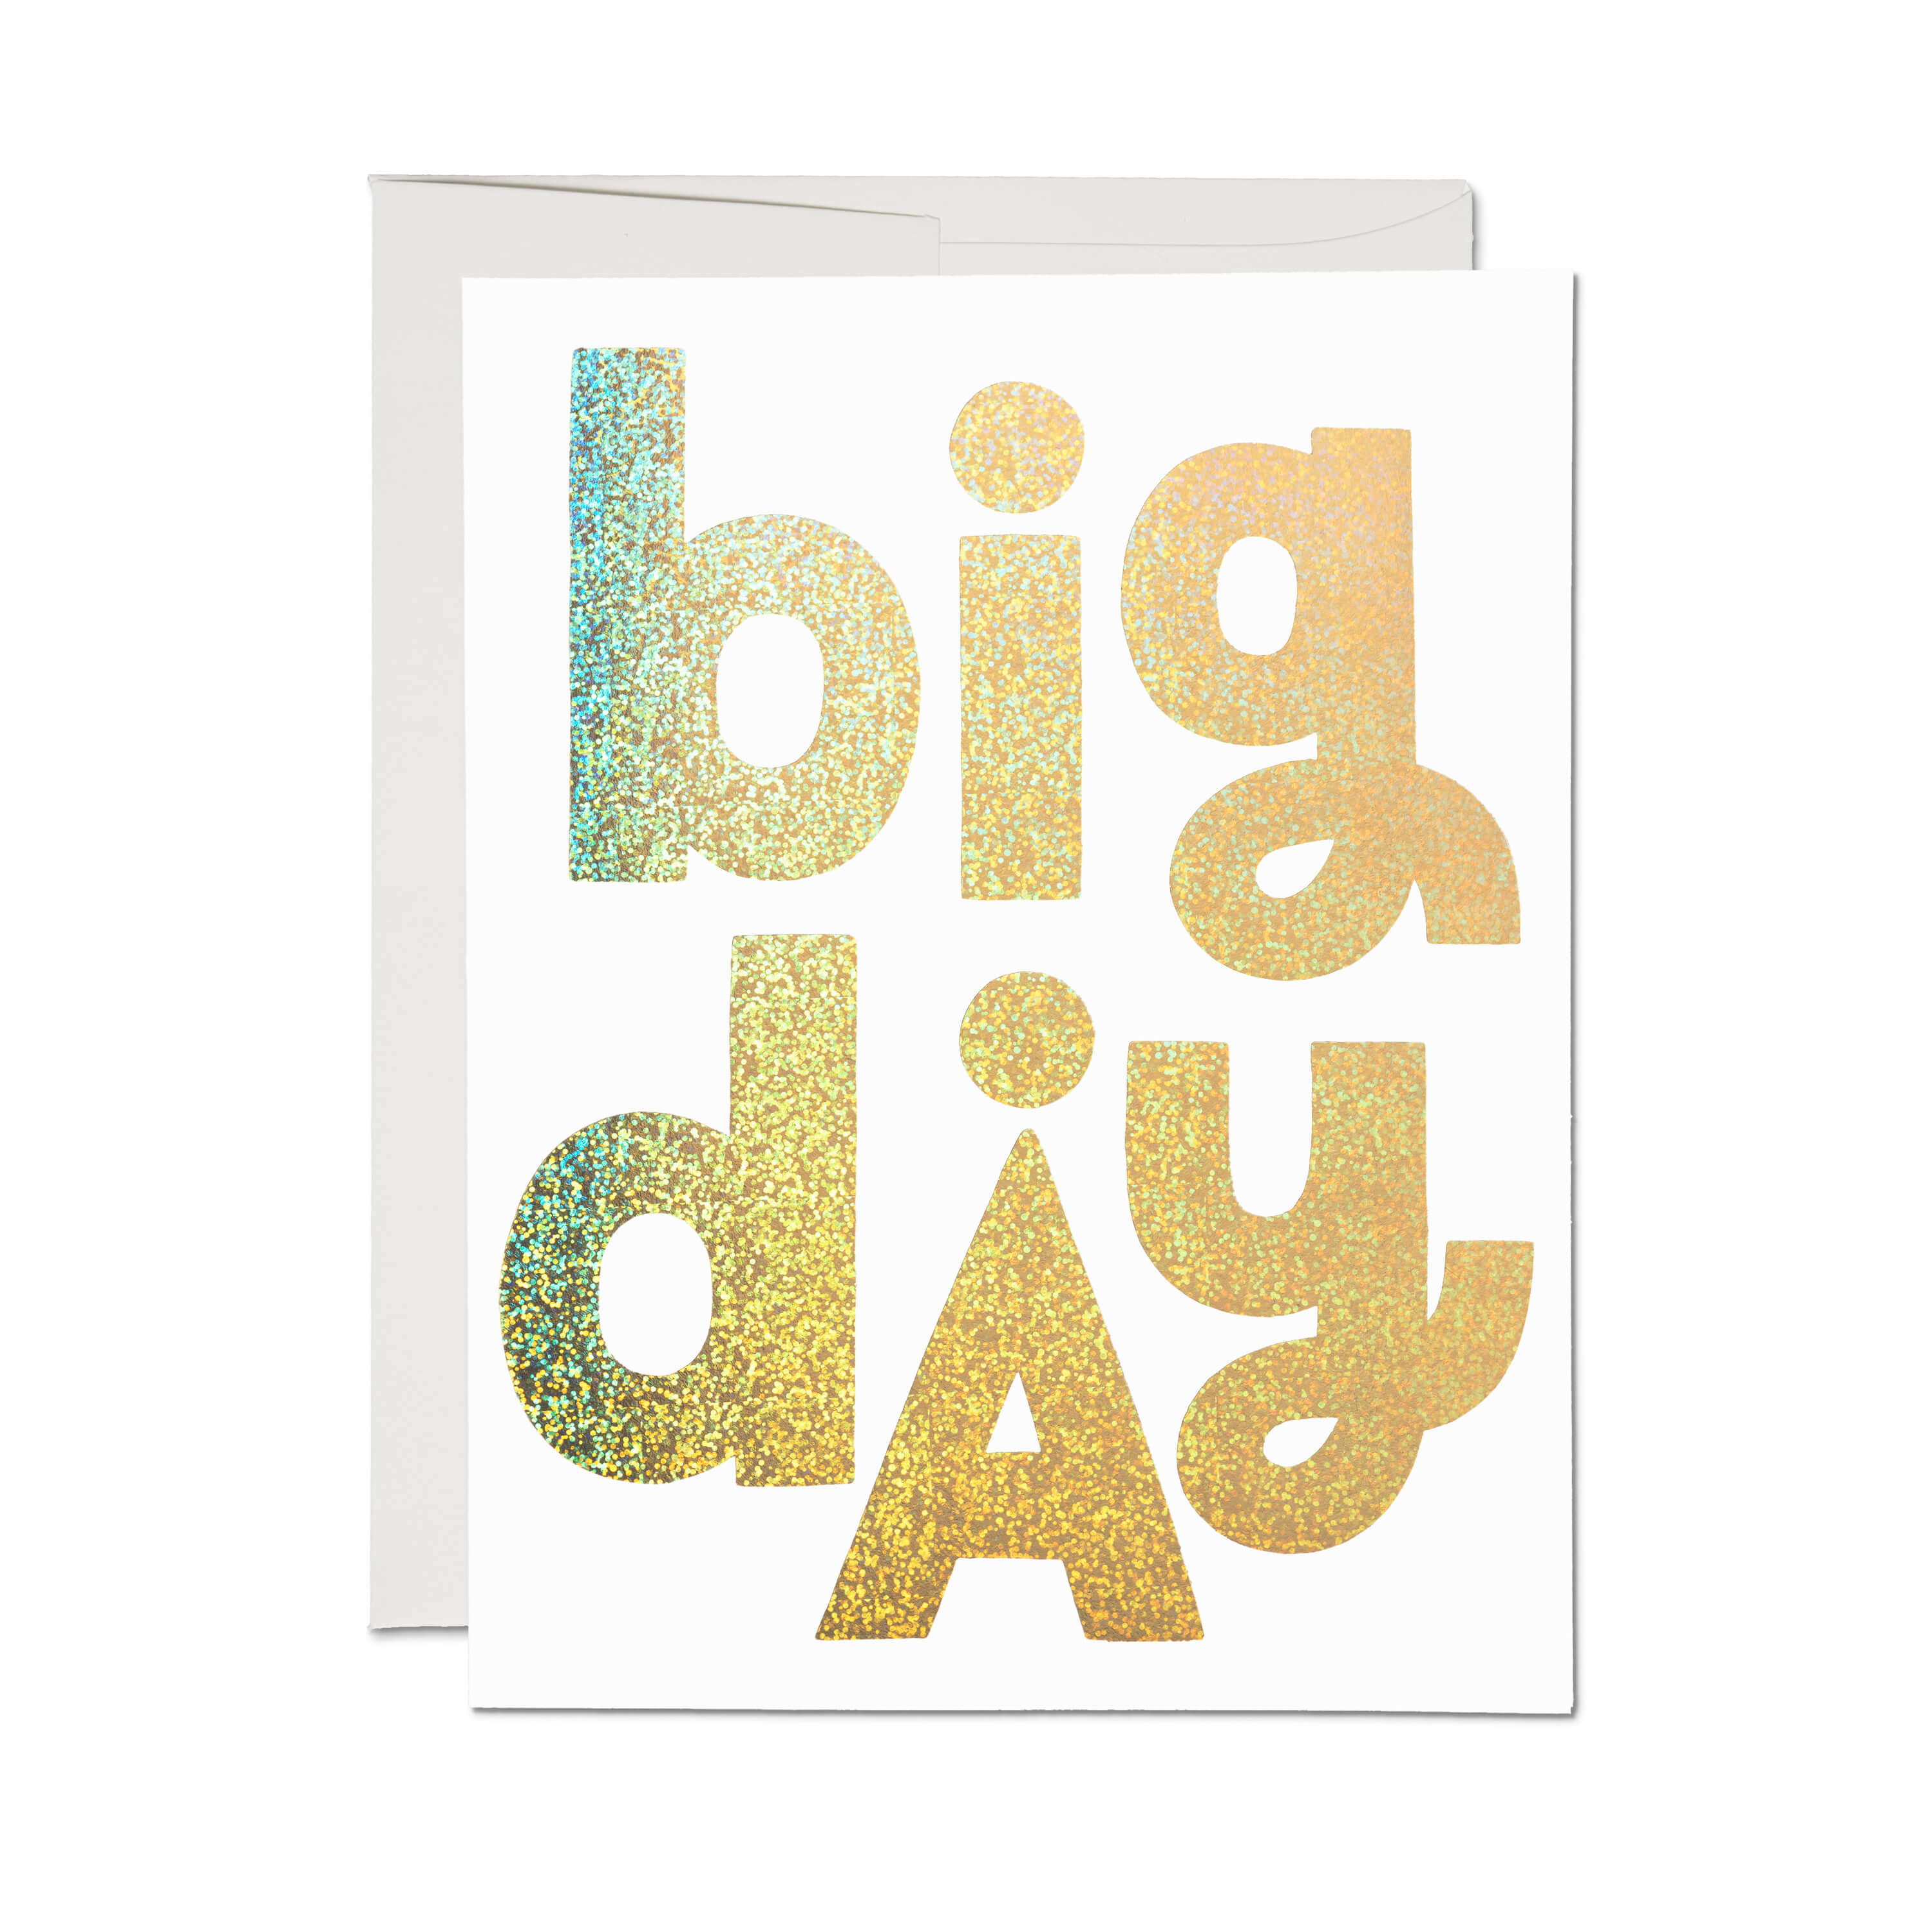 Big Day greeting card Single